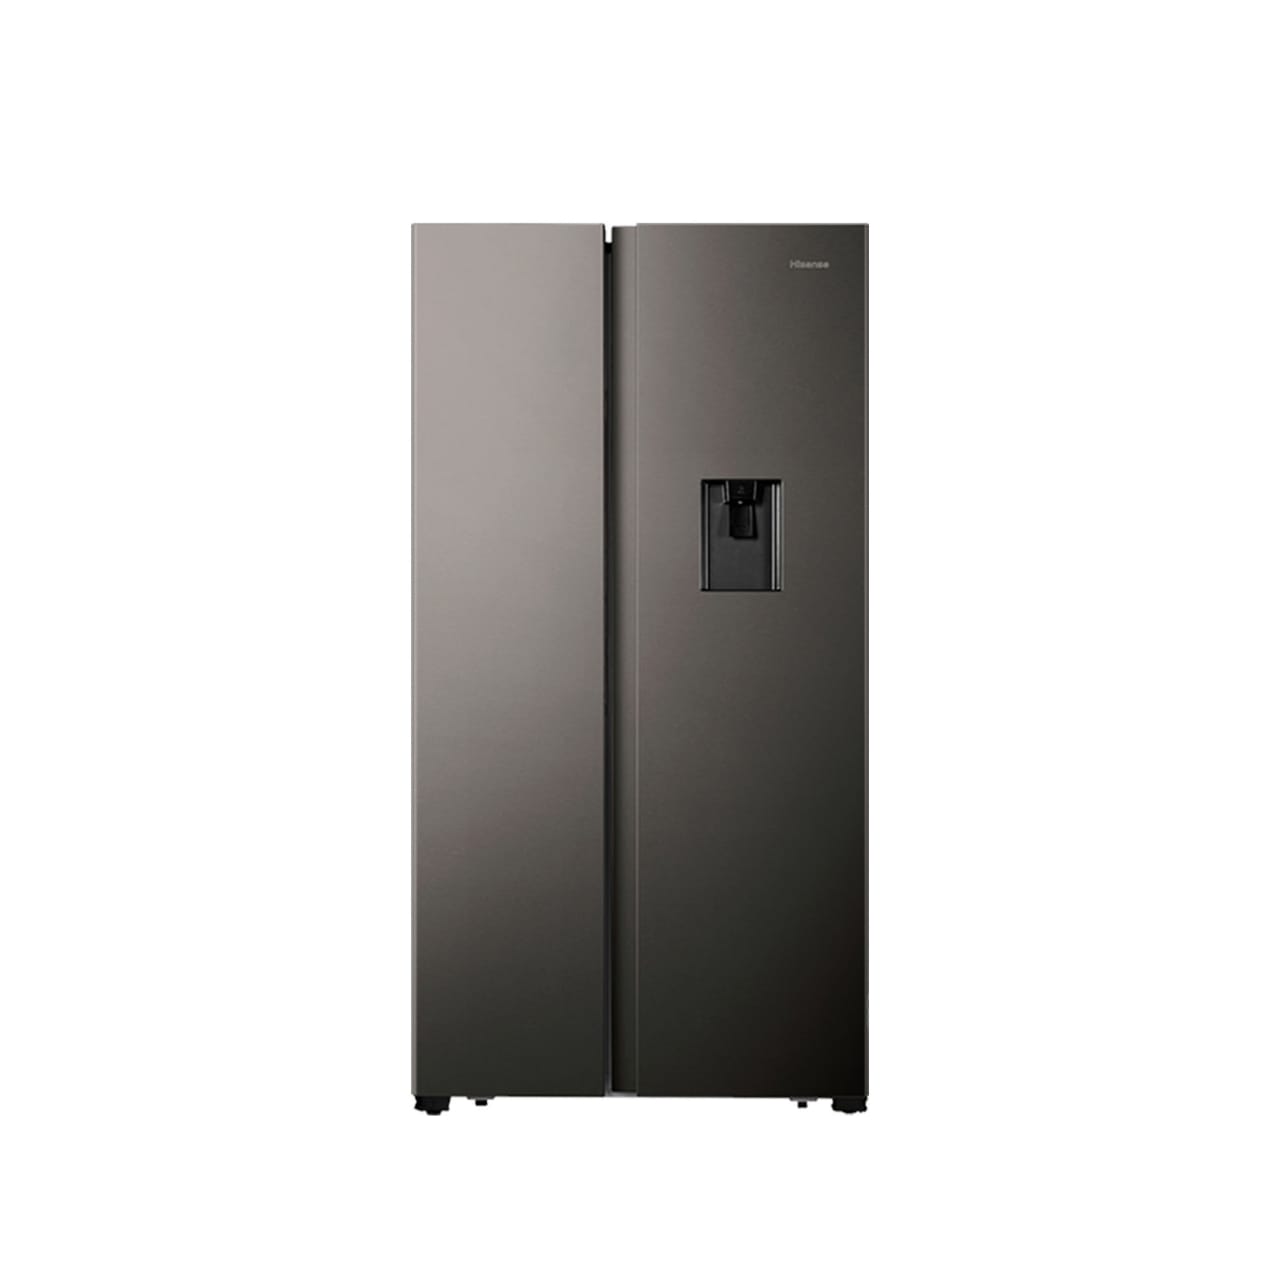 Hisense 508lt Side By Side Refrigerator - Inox